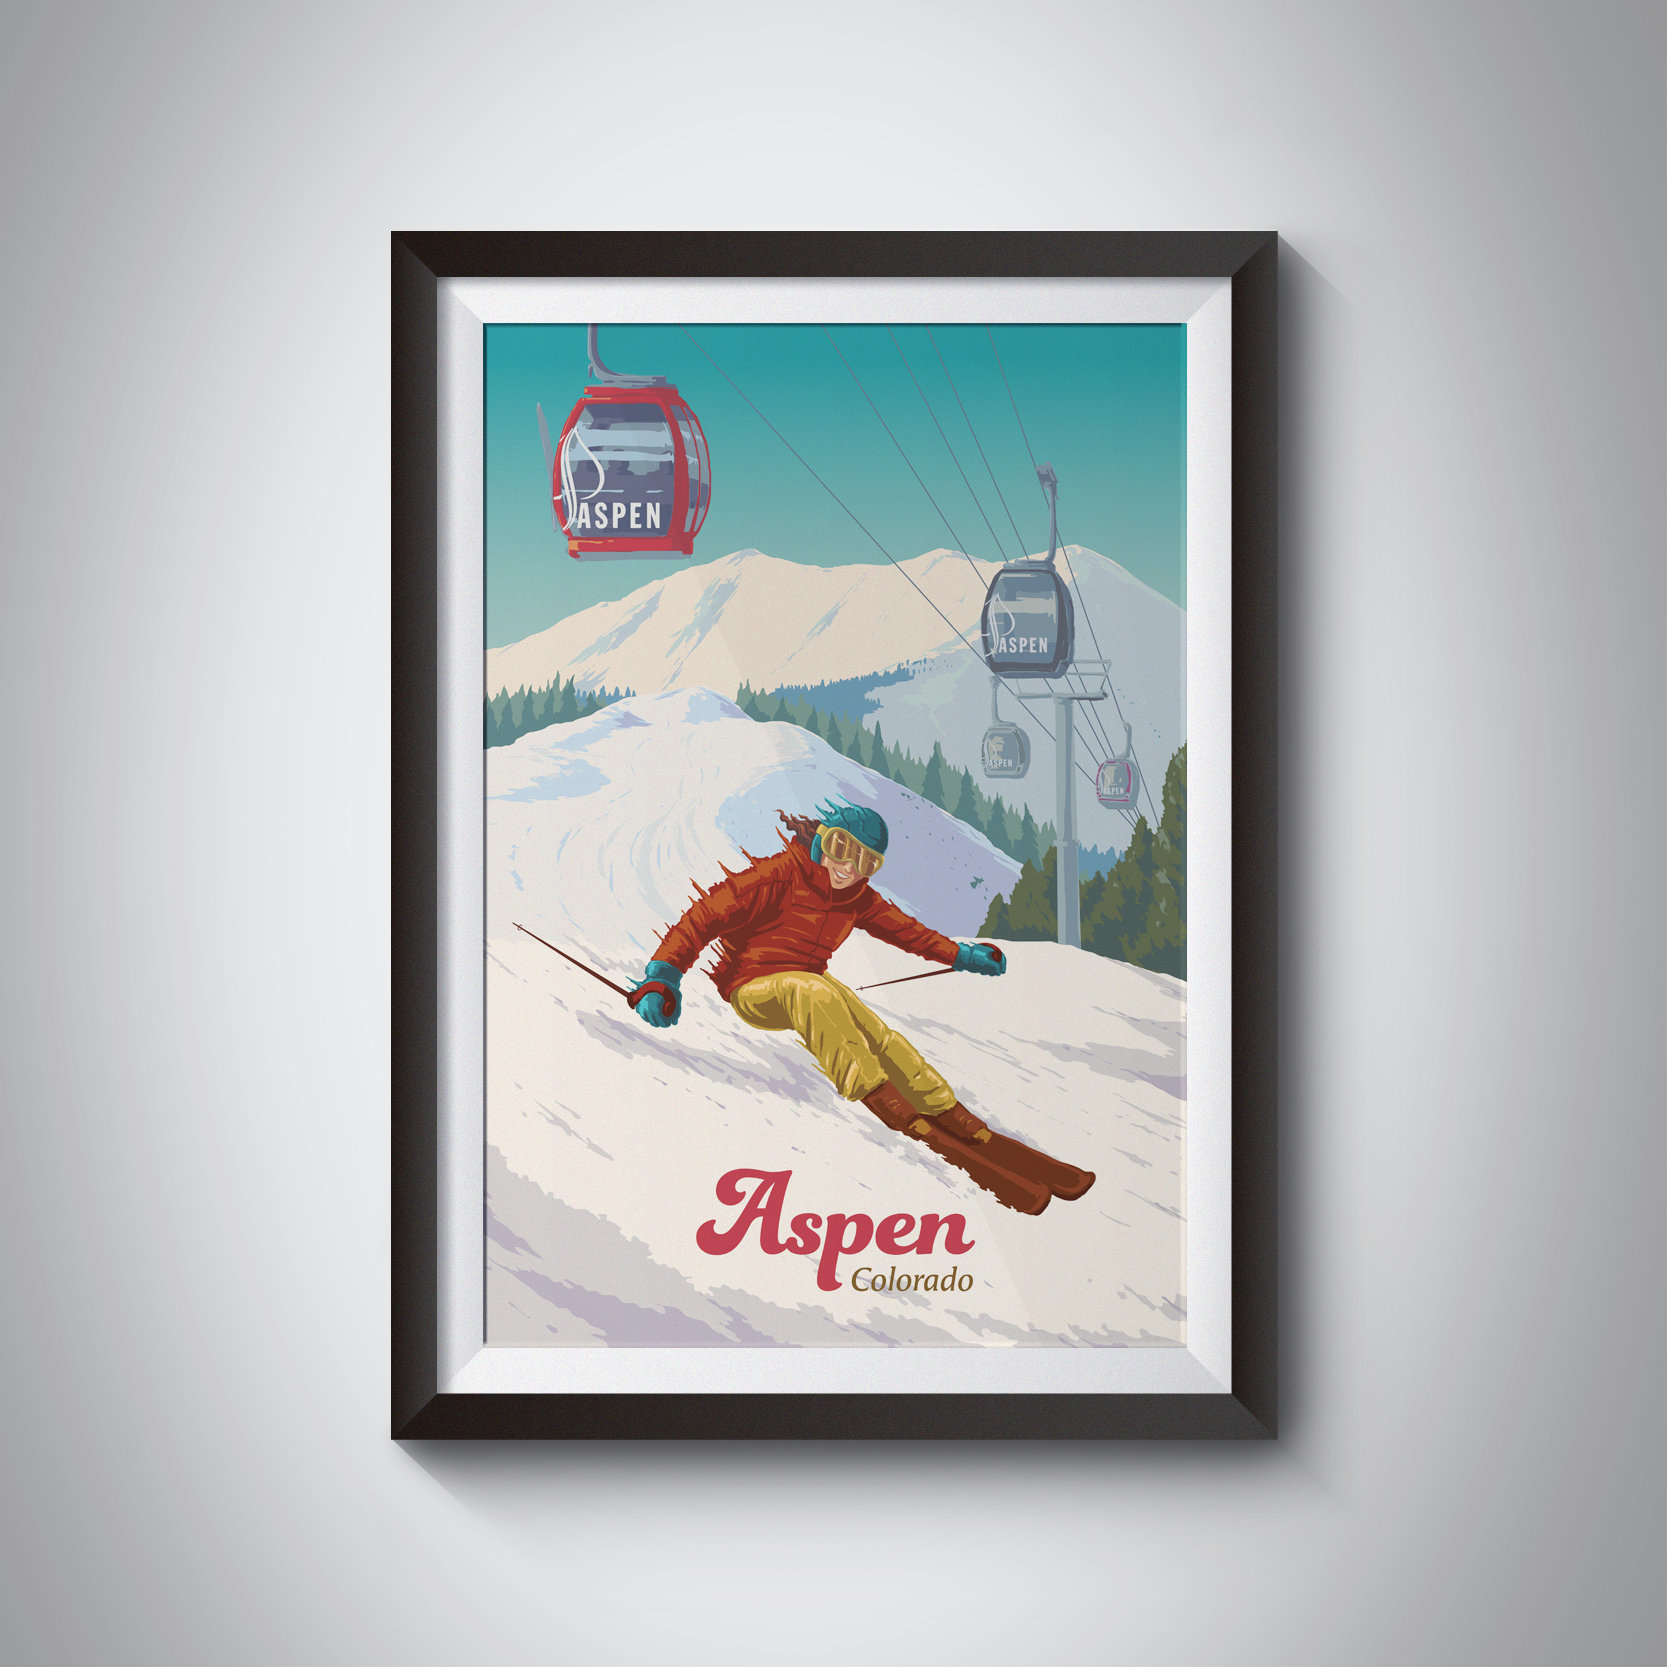 American Made Skis - Washington Capitals